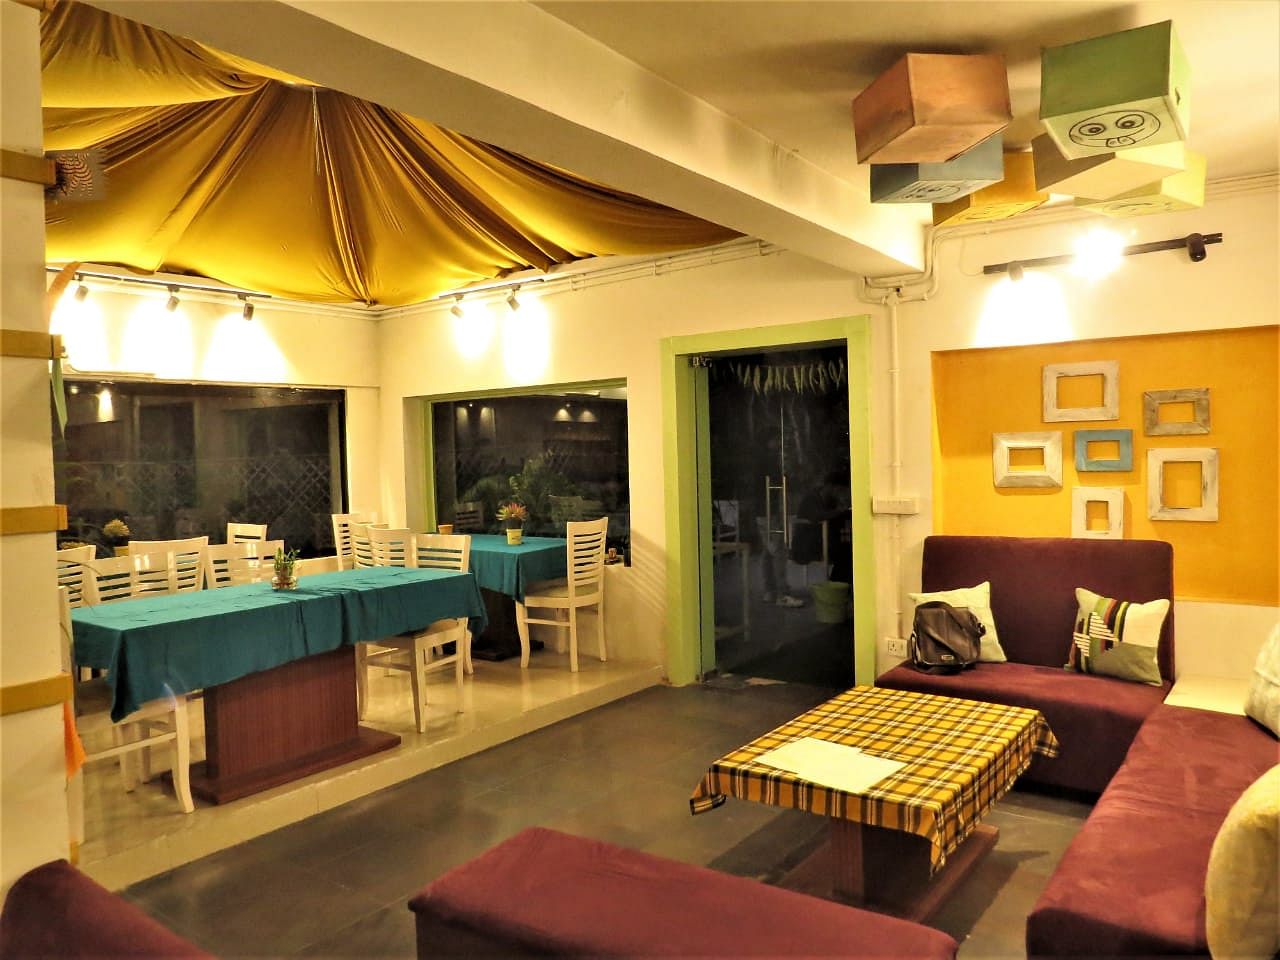 The Idea Gully Cafe in Sector 29, Gurgaon